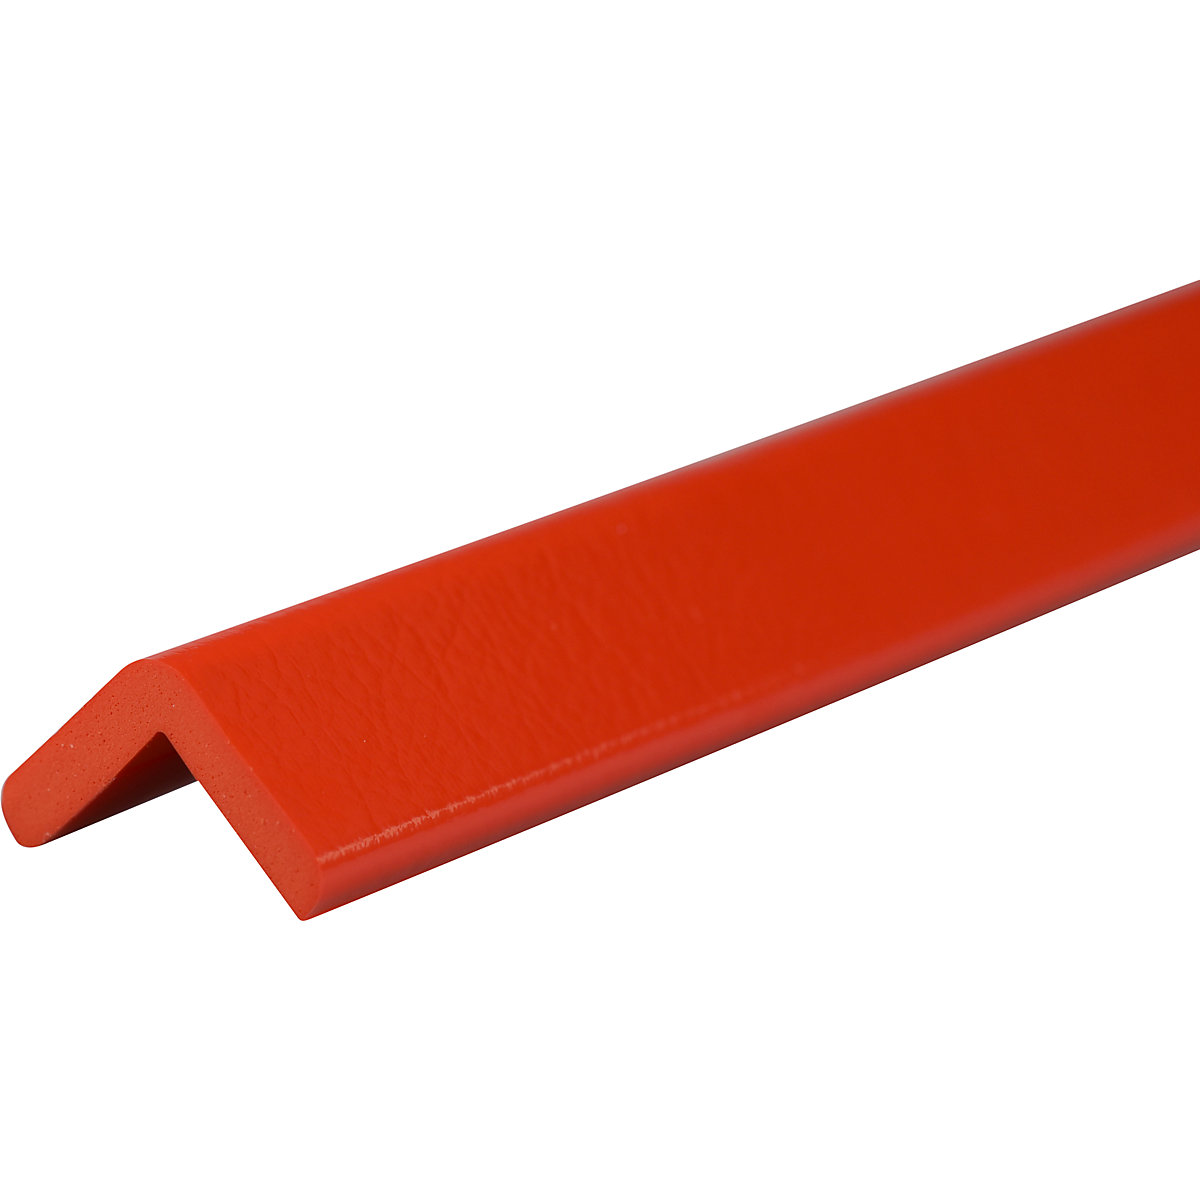 Knuffi®-hoekbescherming – SHG, type H, stuk van 1 m, rood-17